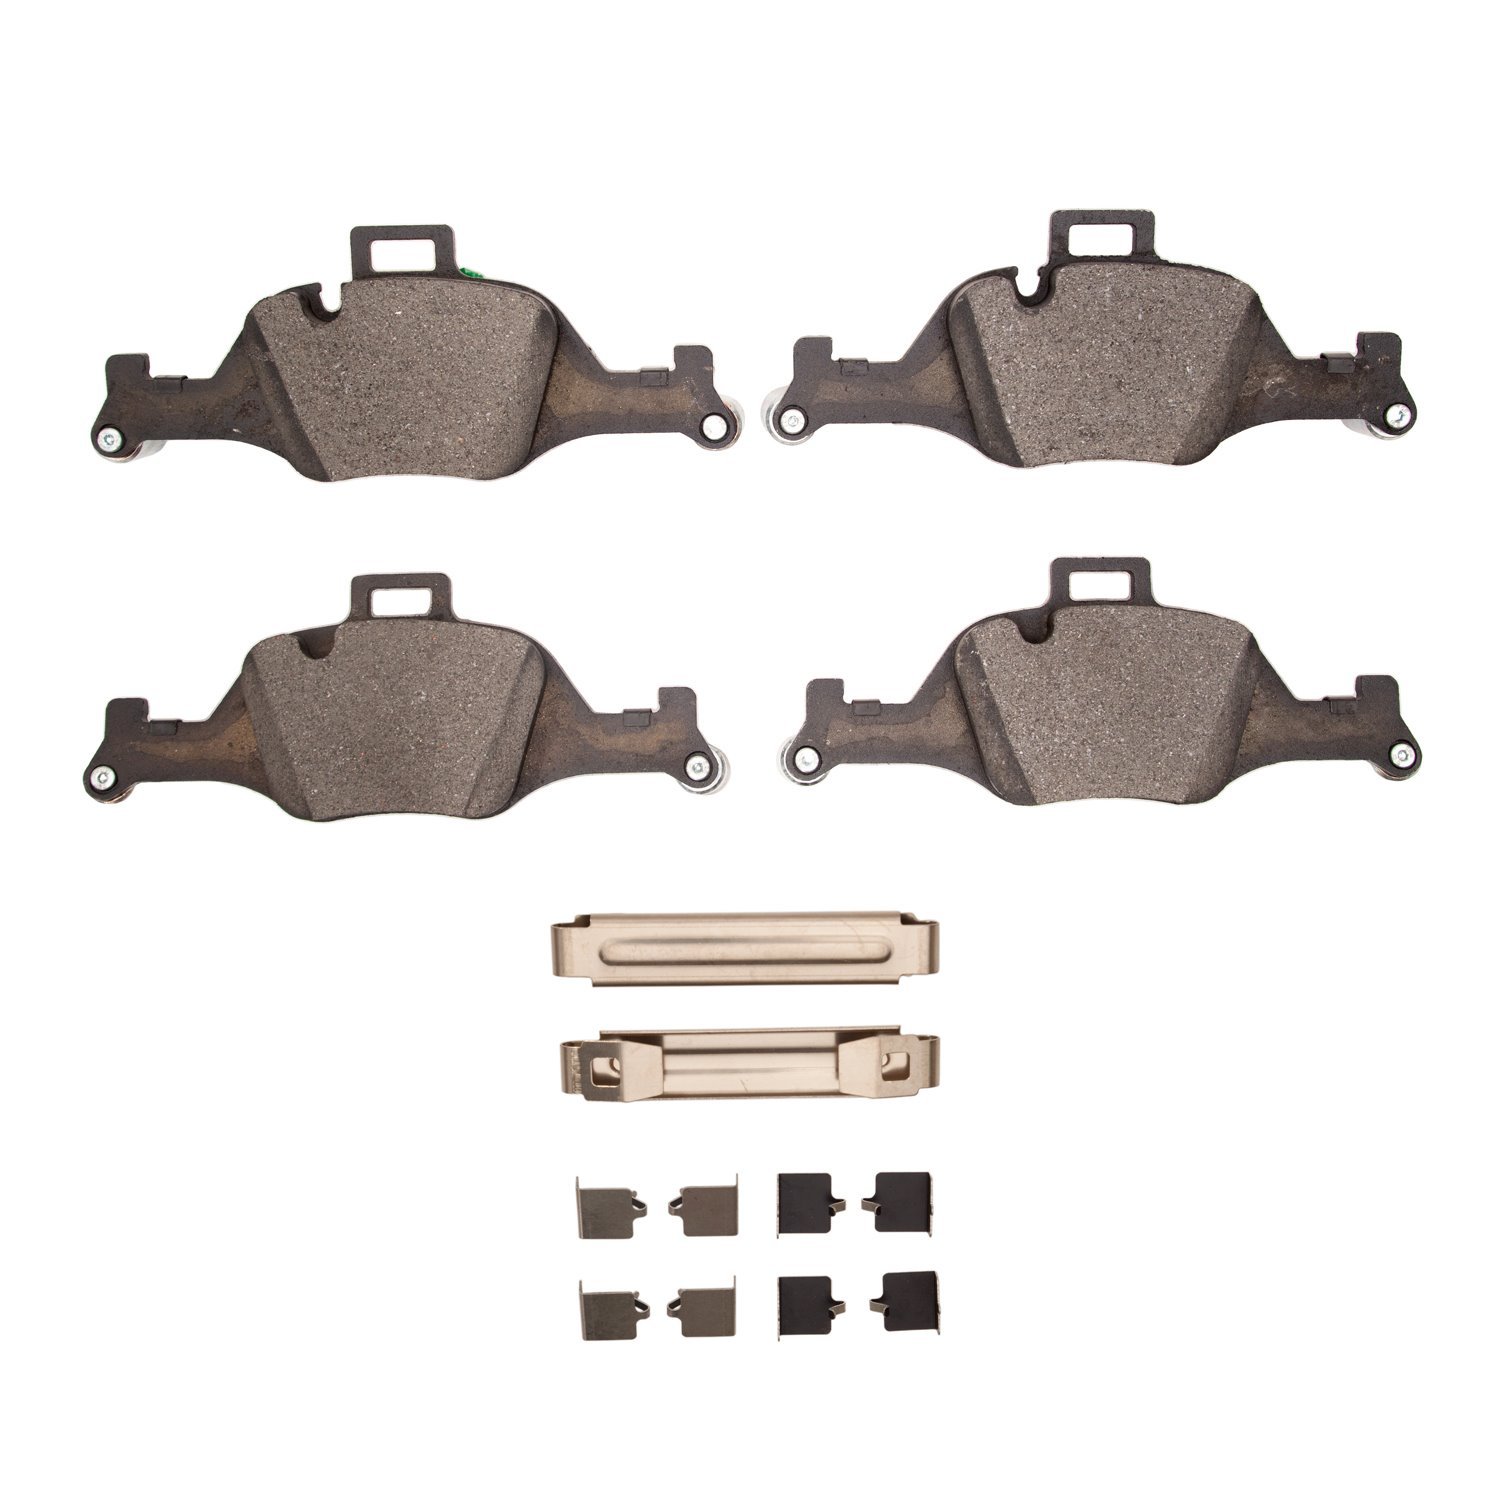 1552-2060-01 5000 Advanced Low-Metallic Brake Pads & Hardware Kit, Fits Select BMW, Position: Front